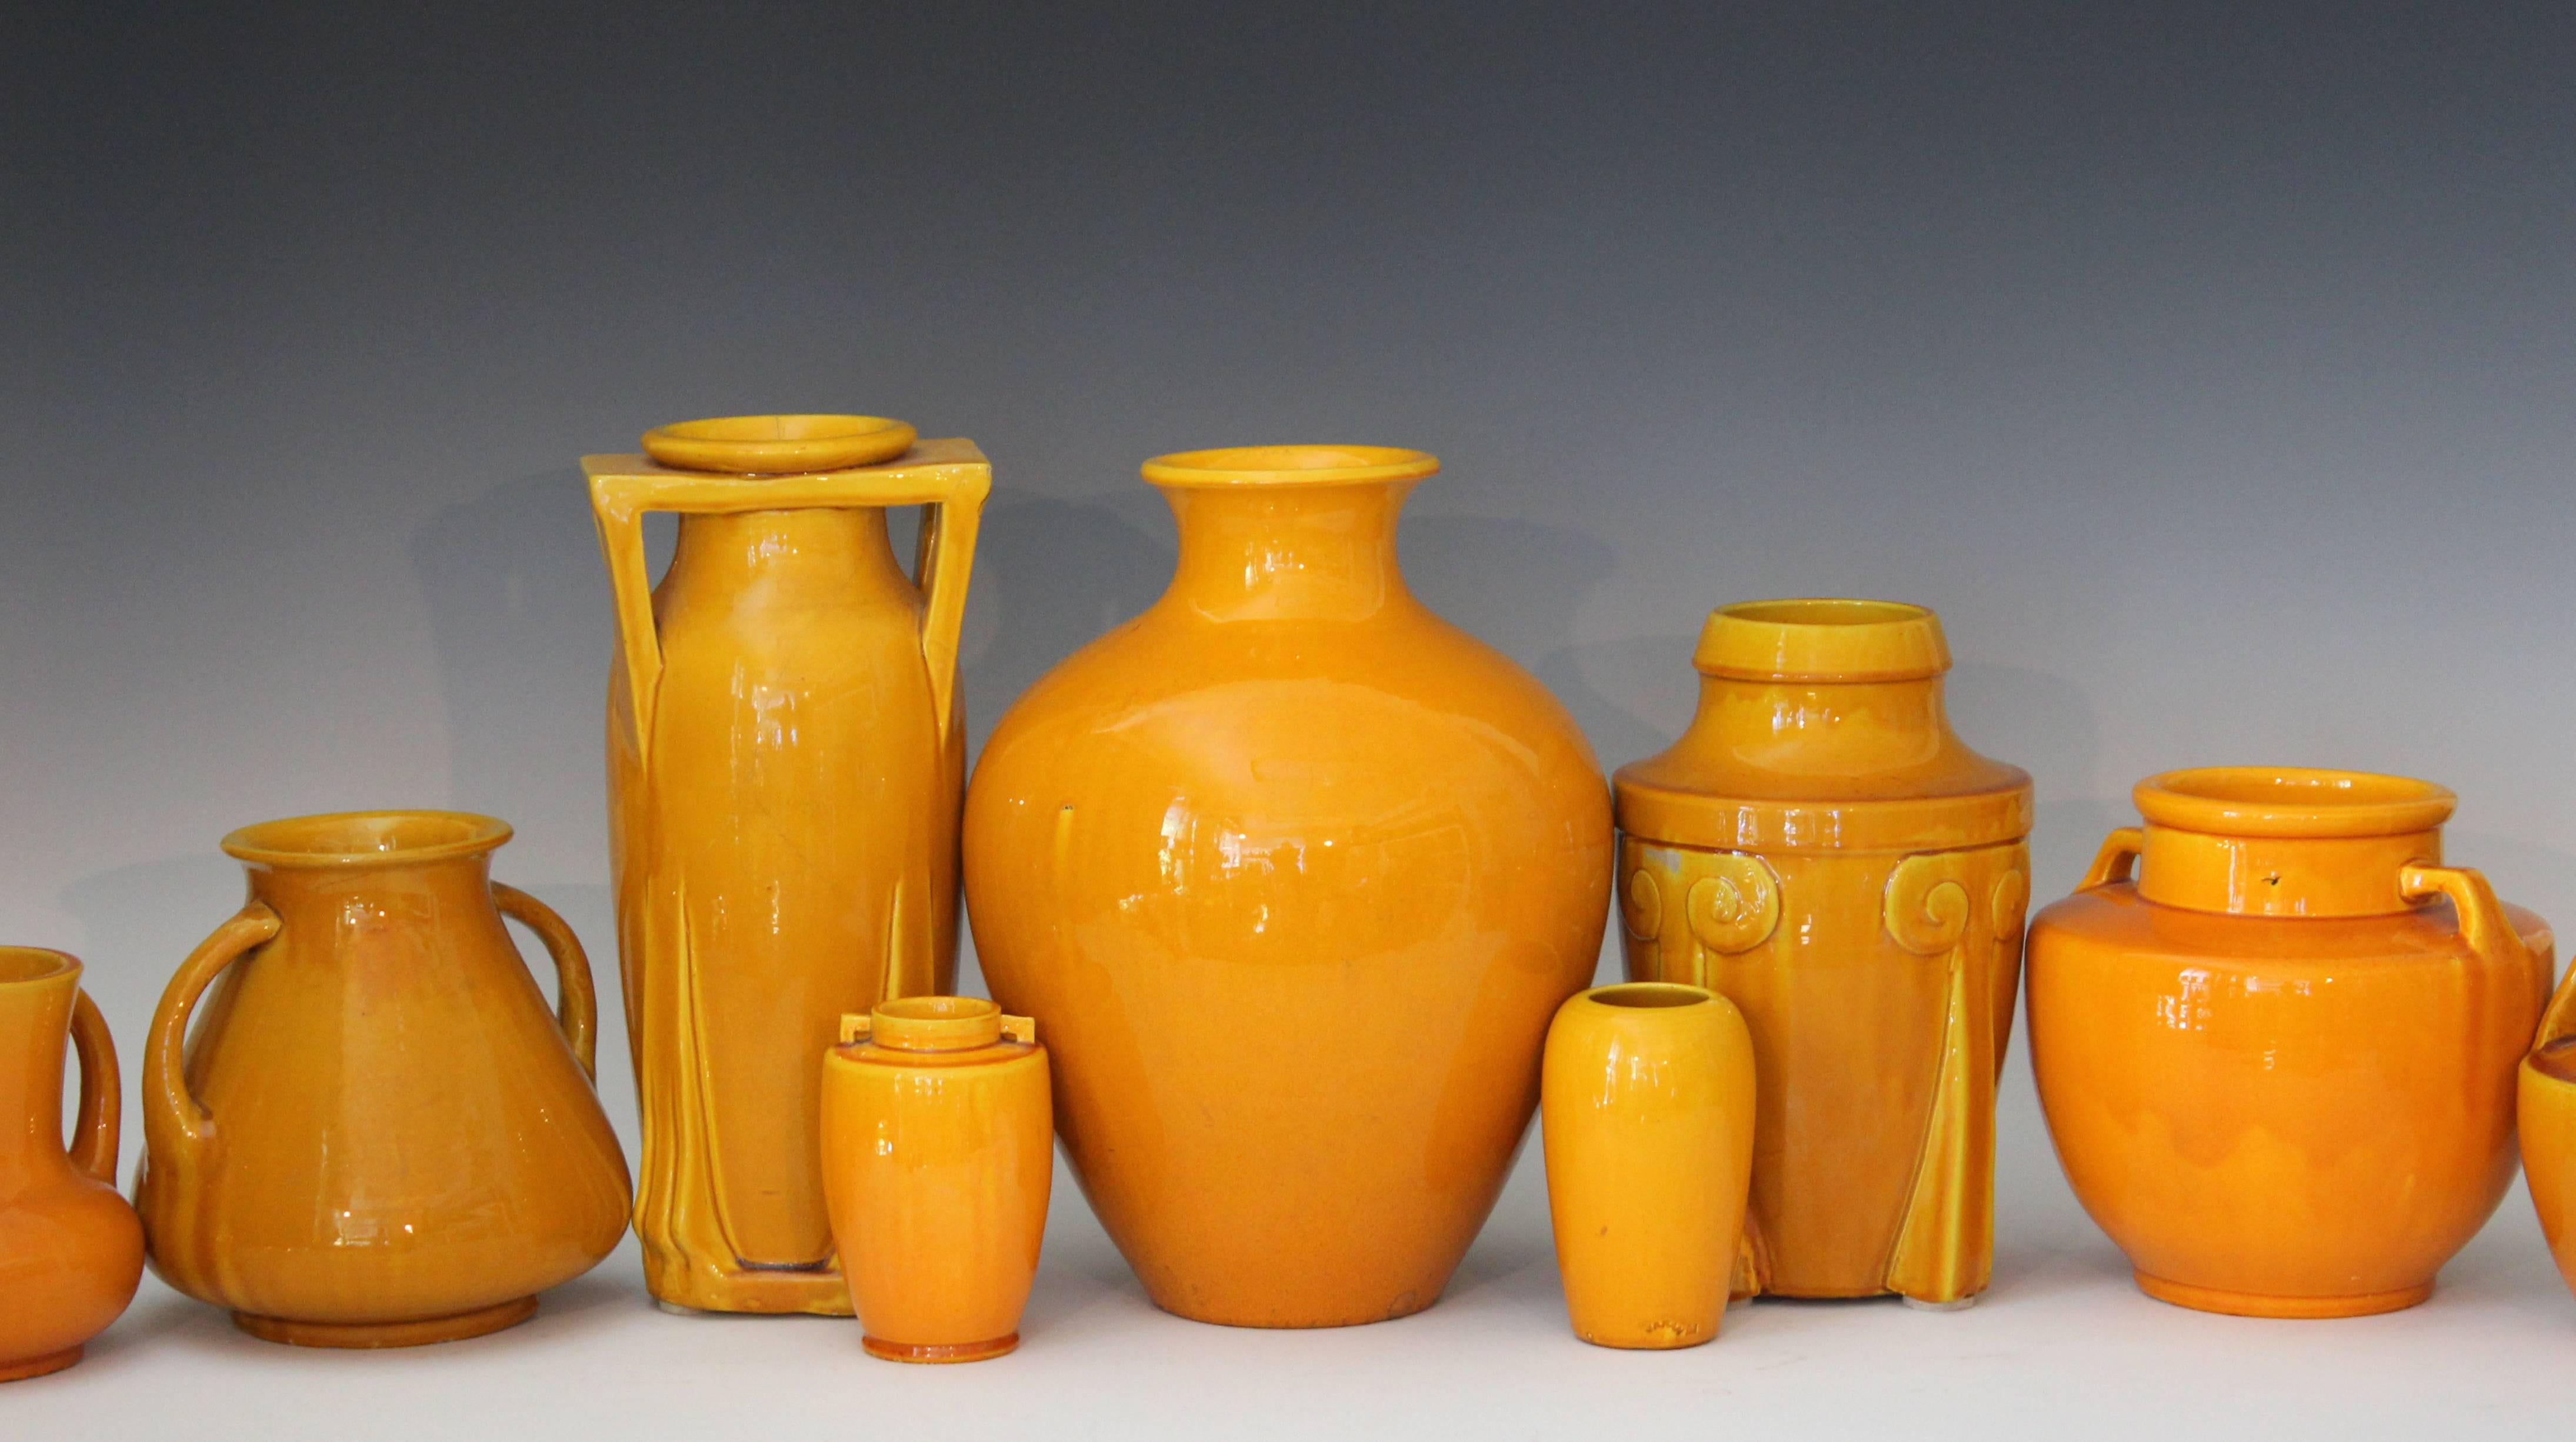 Awaji Pottery Japanese Art Deco Vase with Bright Yellow Monochrome Glaze For Sale 1